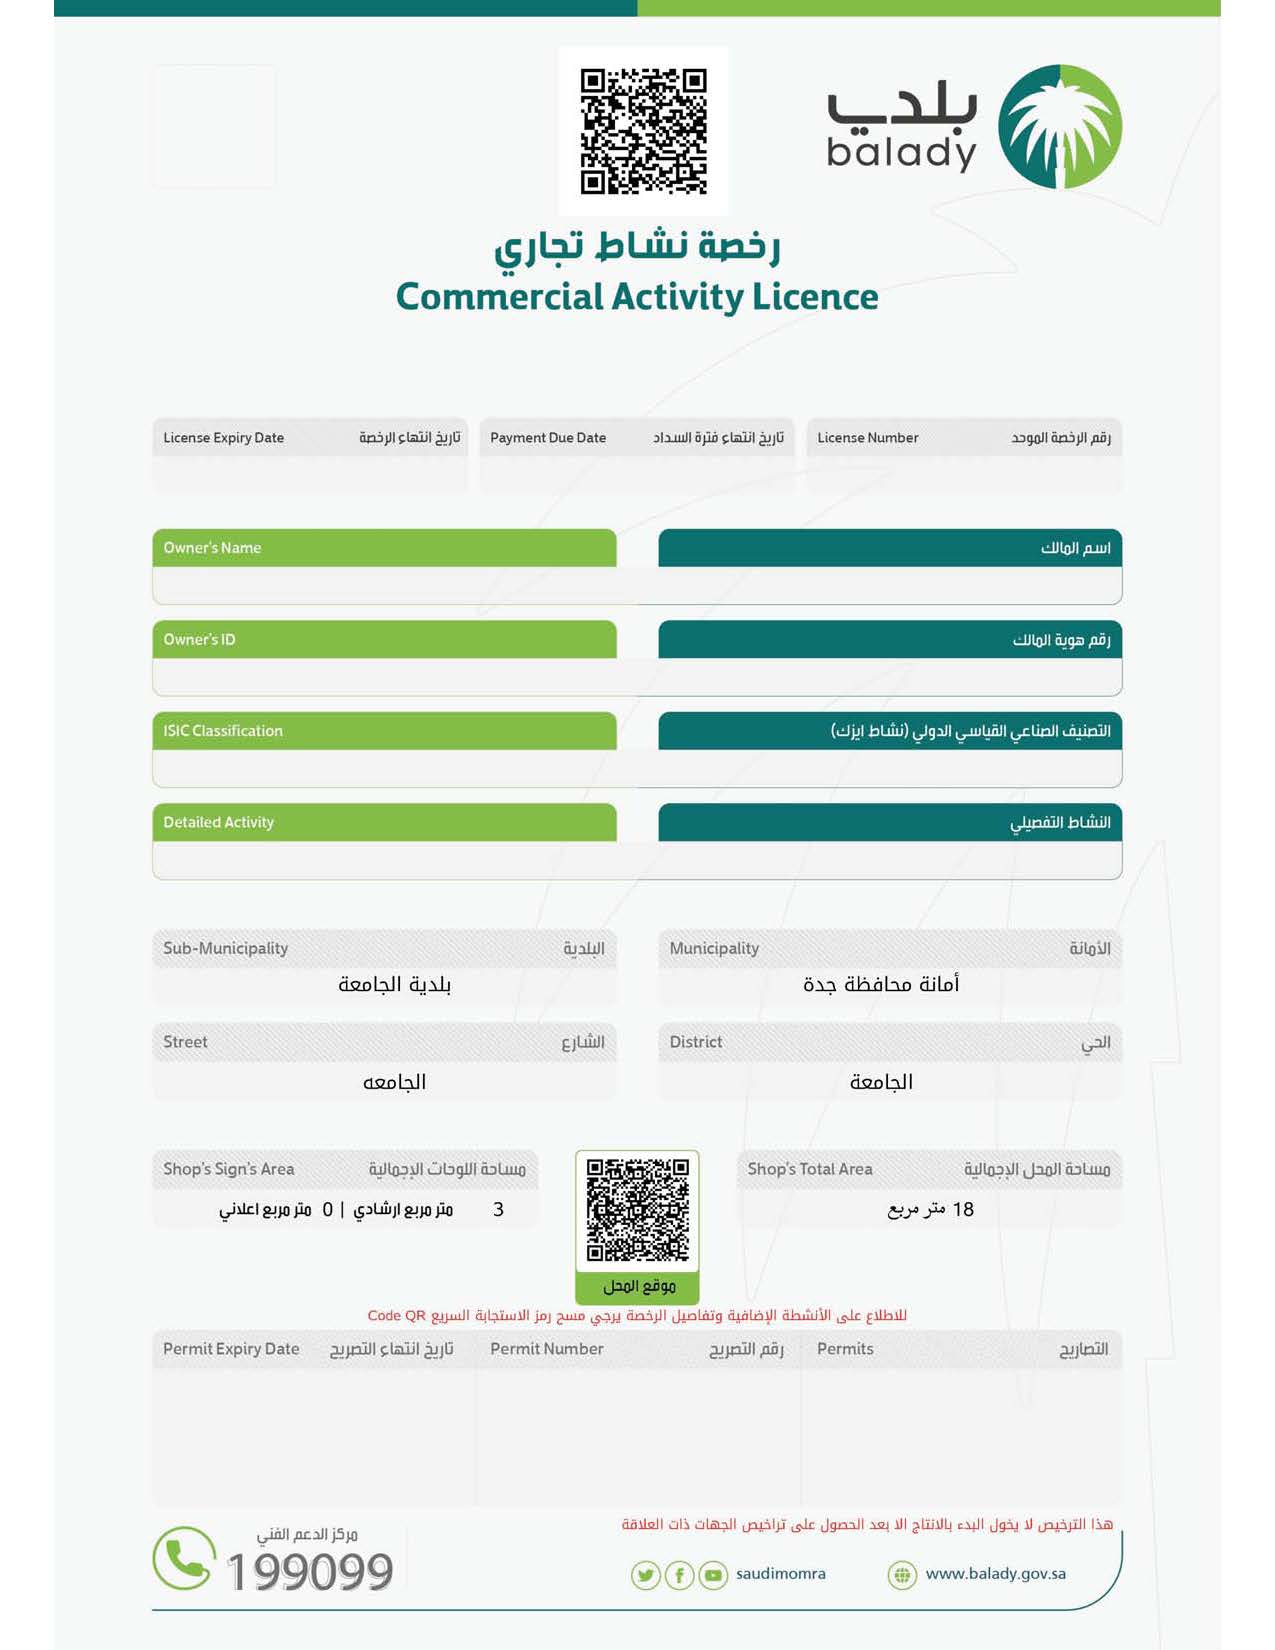 البلديات Page 07 One of the leading companies and a significant number in all its fields